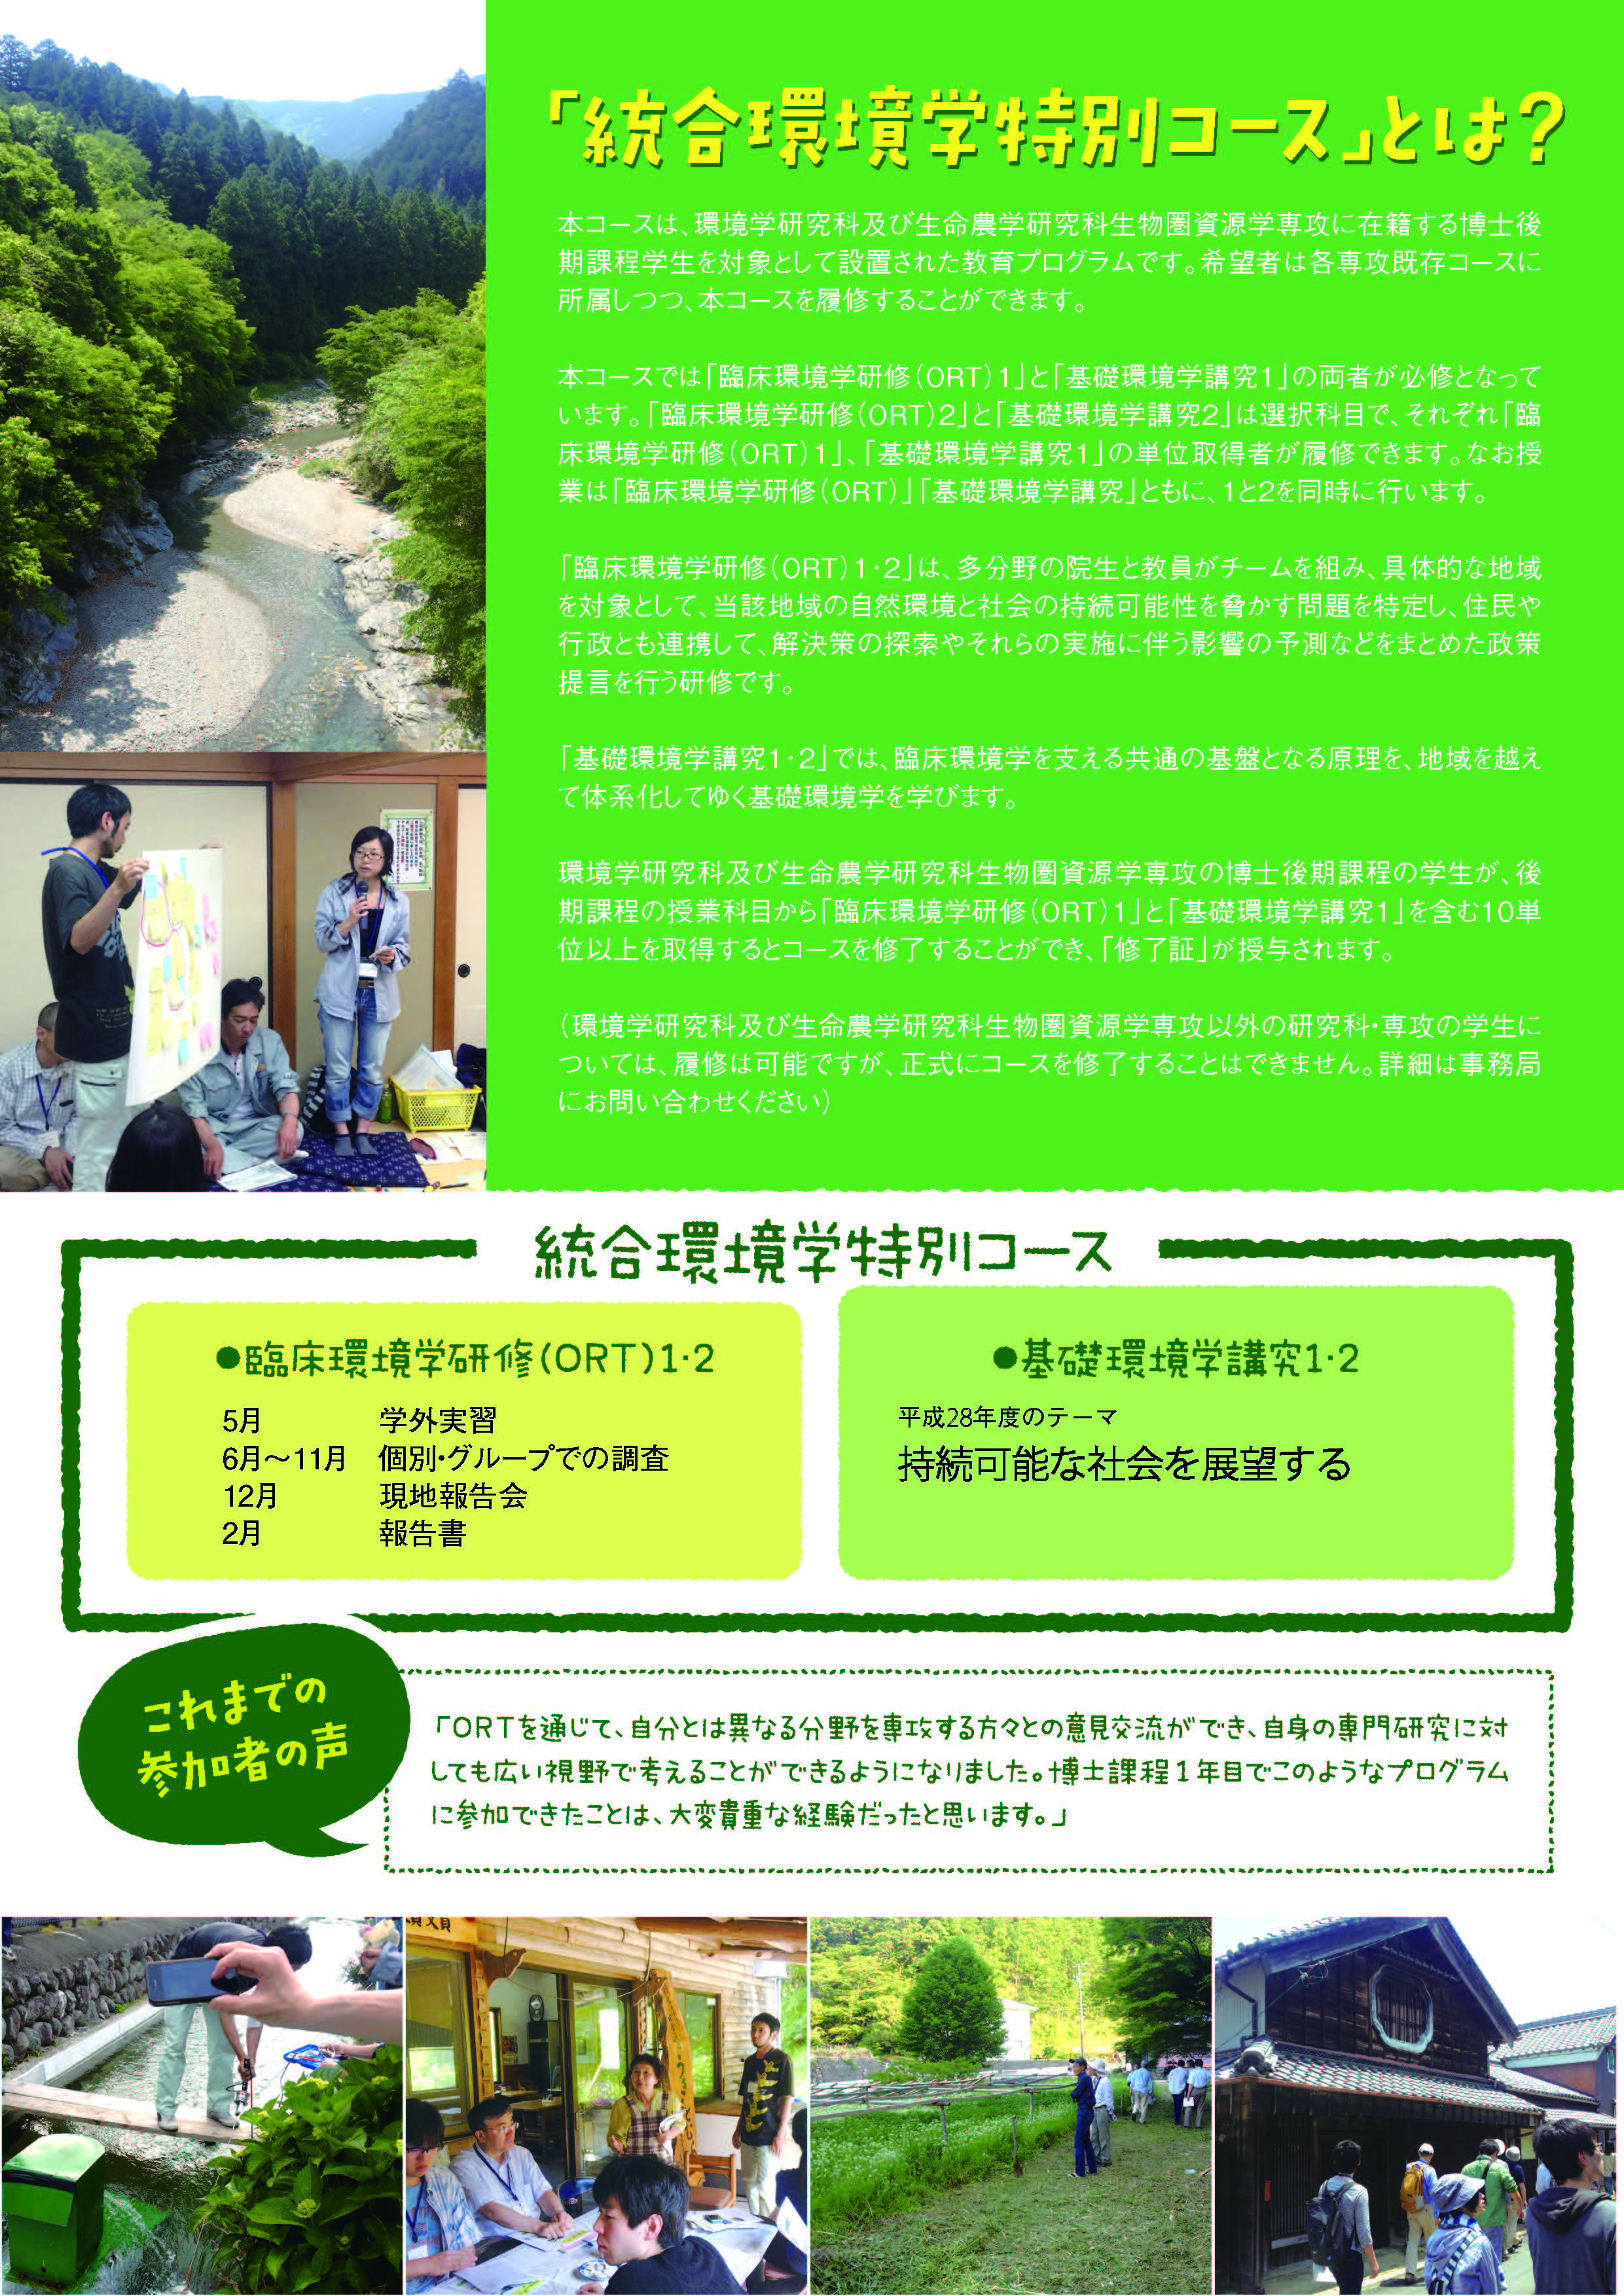 http://ercscd.env.nagoya-u.ac.jp/jpn/course/2016flyer_2.jpg